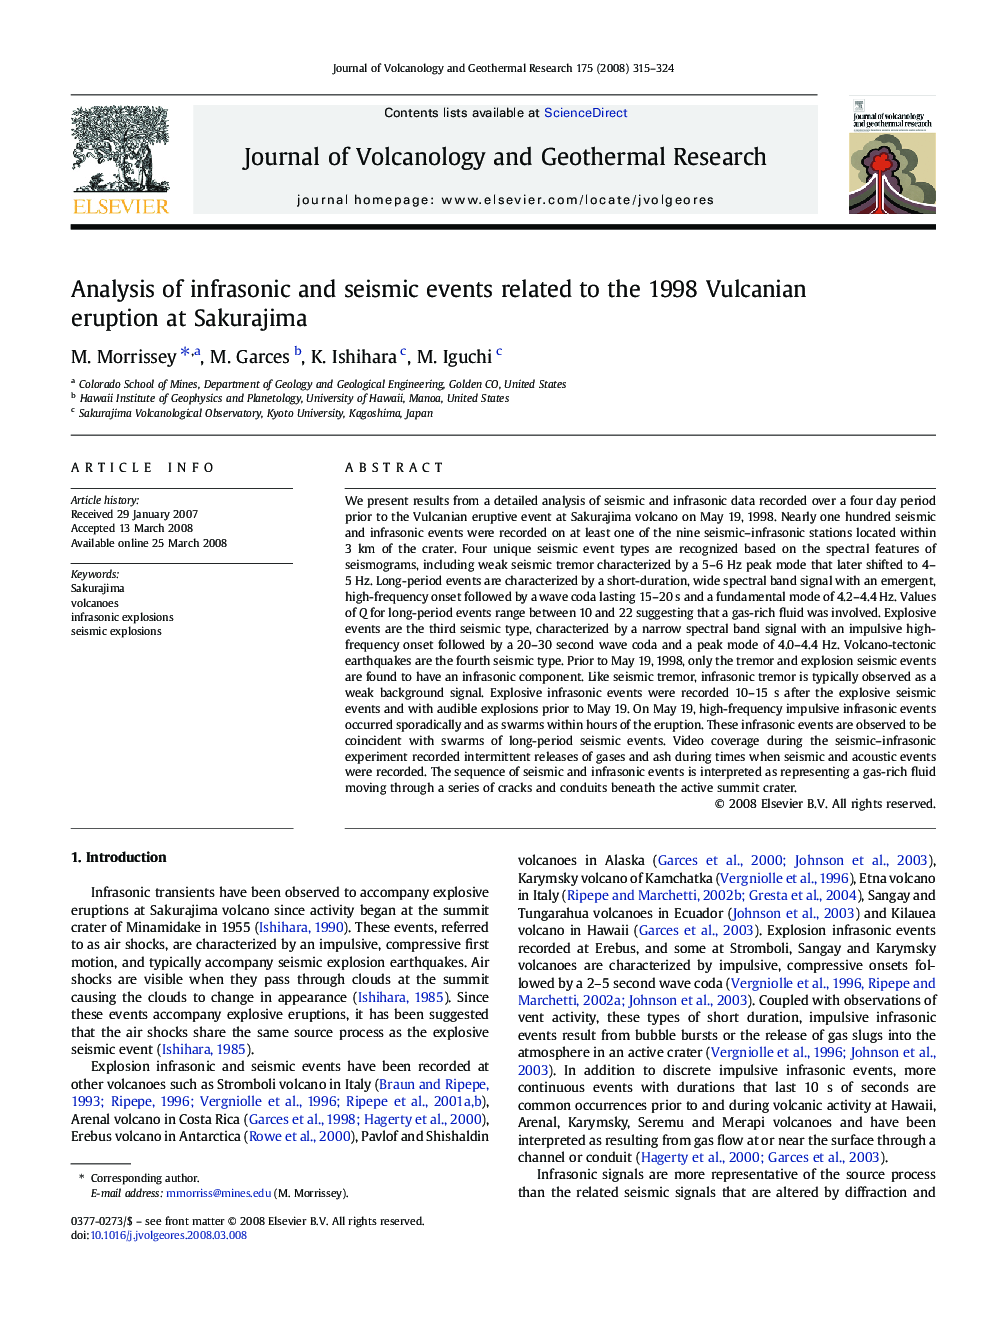 Analysis of infrasonic and seismic events related to the 1998 Vulcanian eruption at Sakurajima